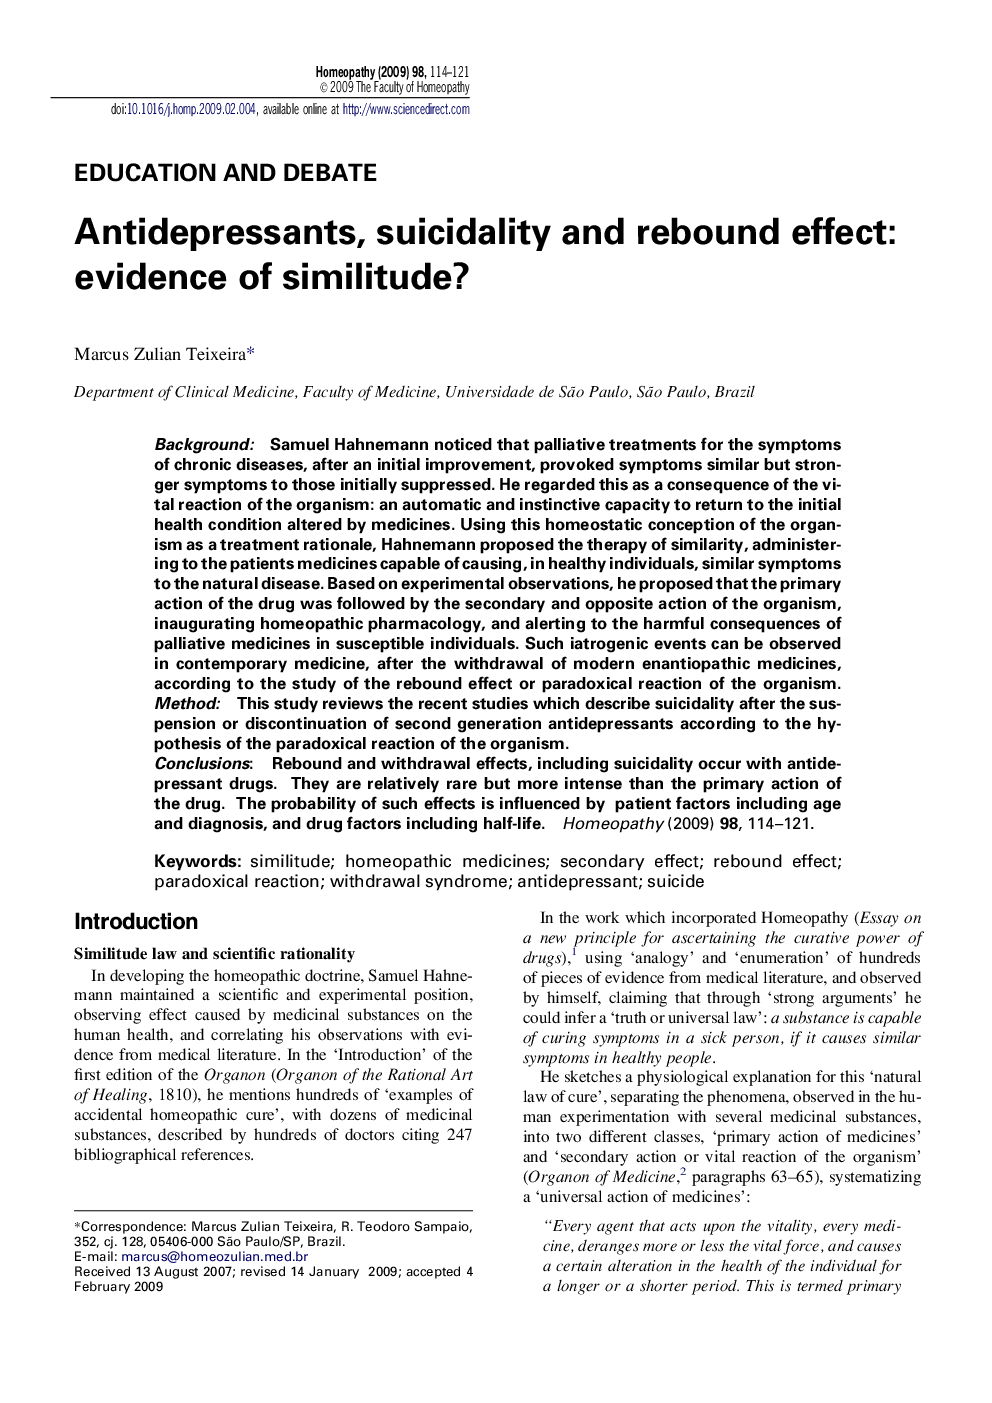 Antidepressants, suicidality and rebound effect: evidence of similitude?